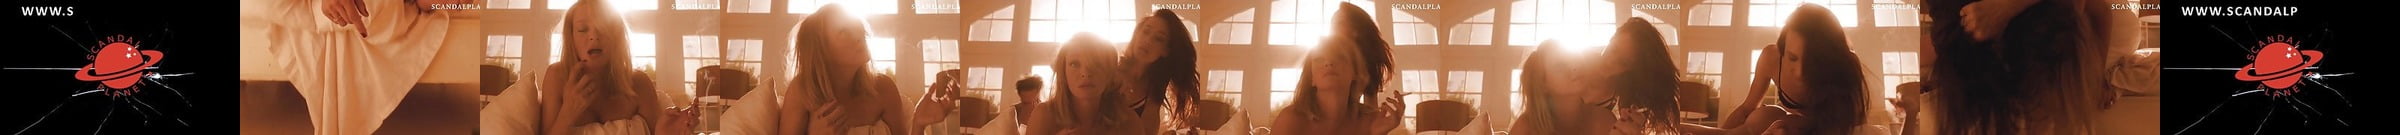 Anna Kendrick And Blake Lively Lesbo Kiss On Scandalplanet 